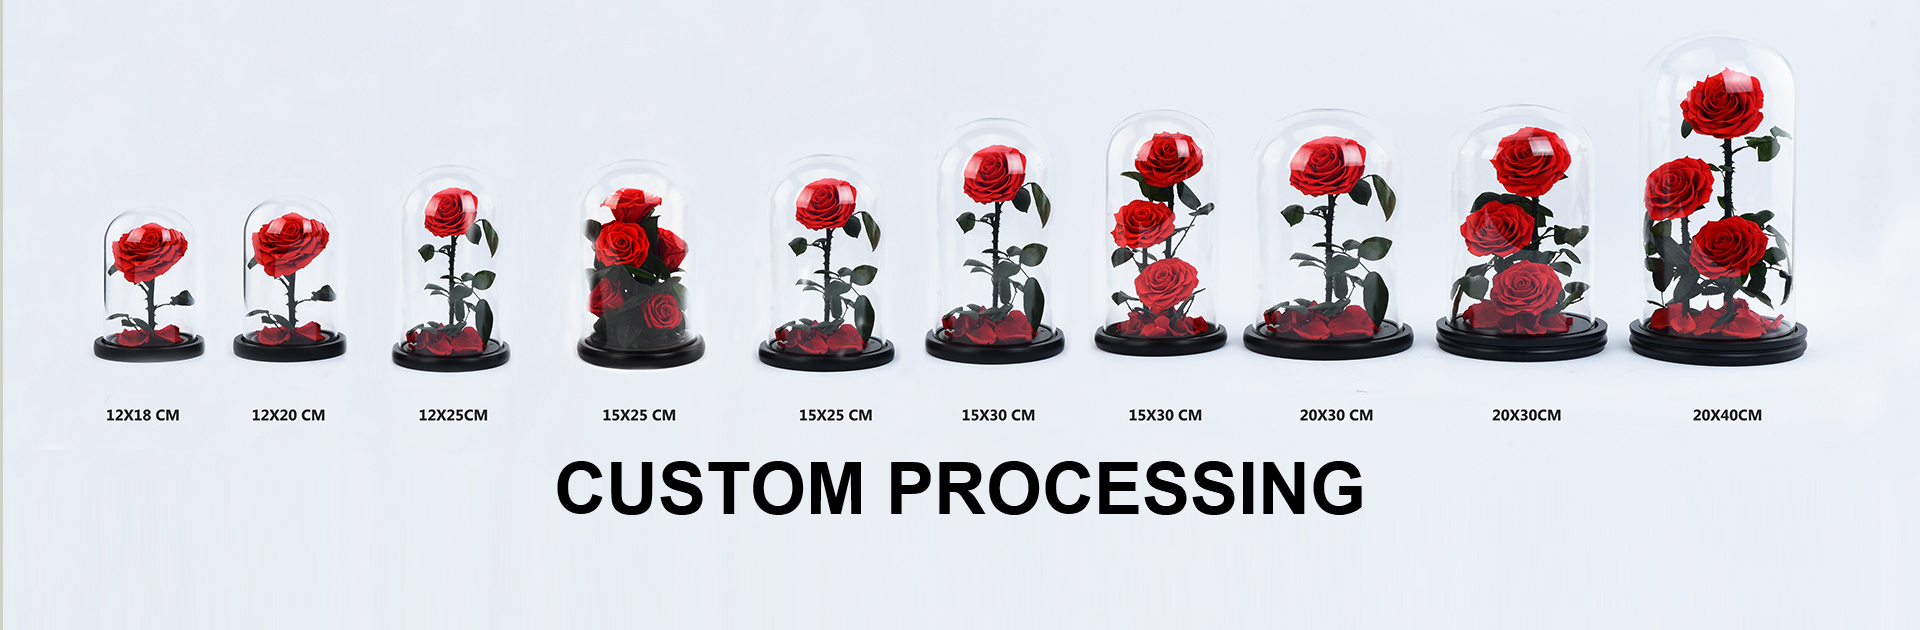 Custom processing